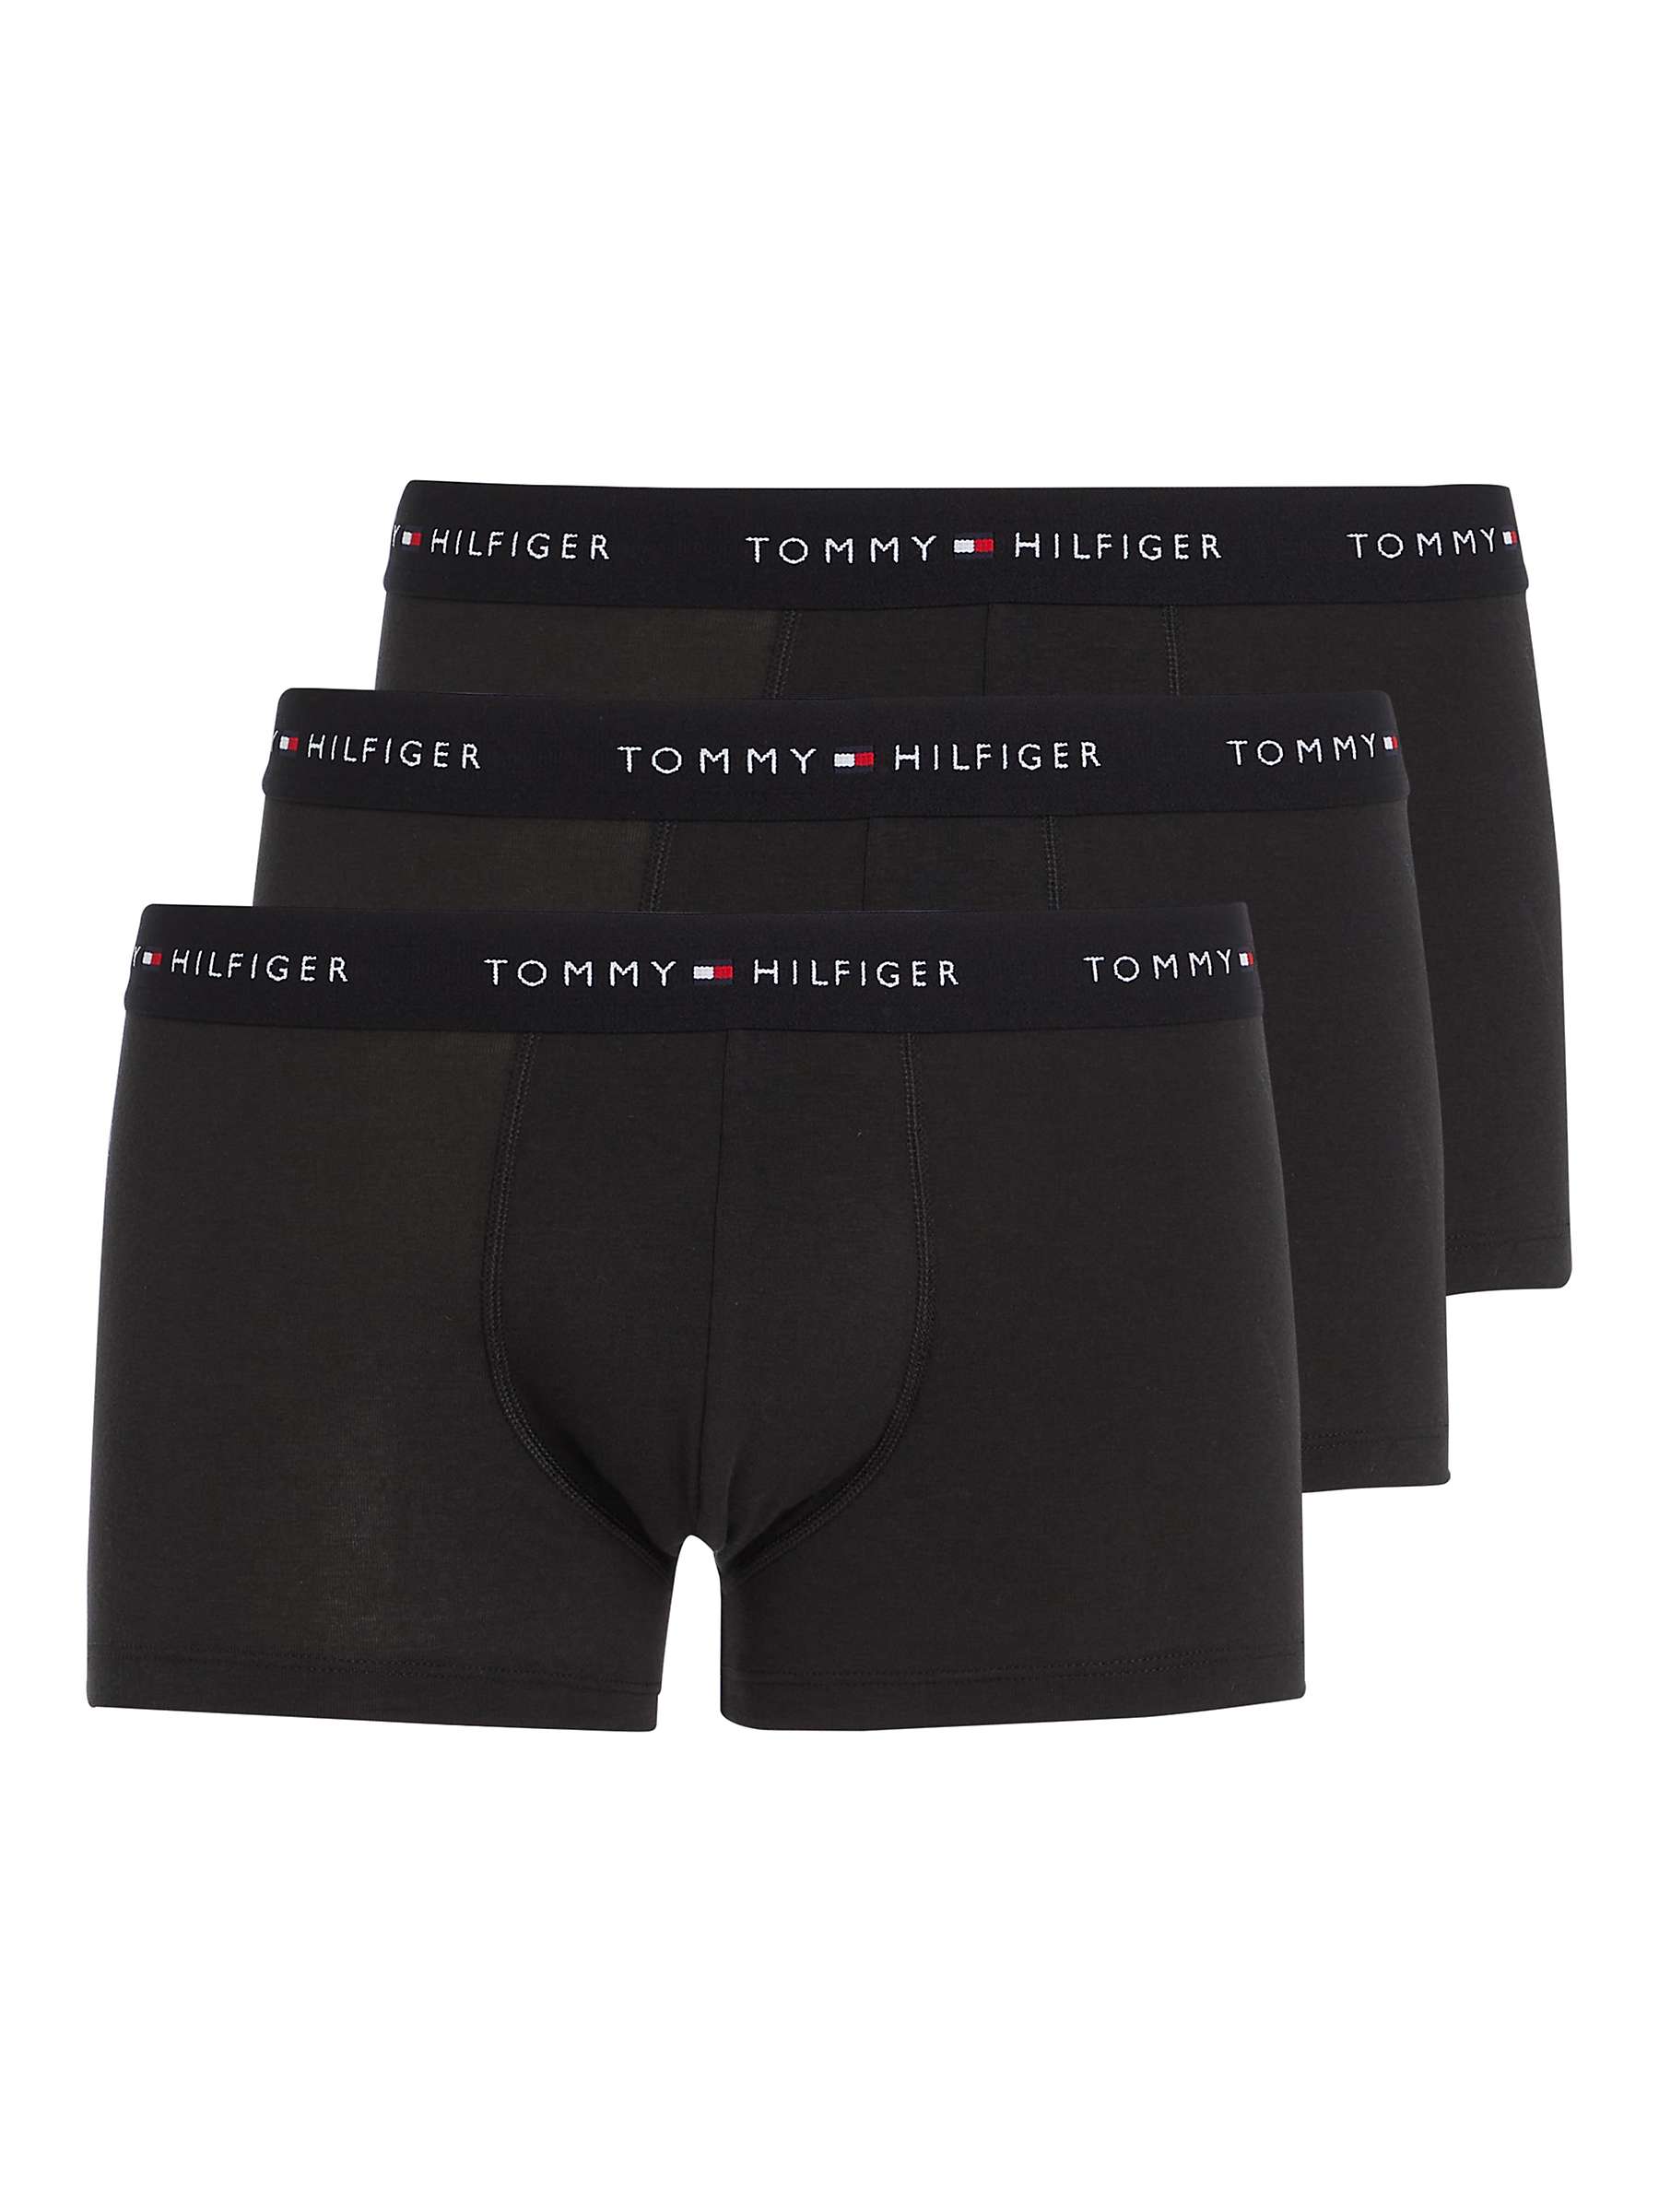 Buy Tommy Hilfiger Essential Cotton Logo Trunks, Pack of 3 Online at johnlewis.com